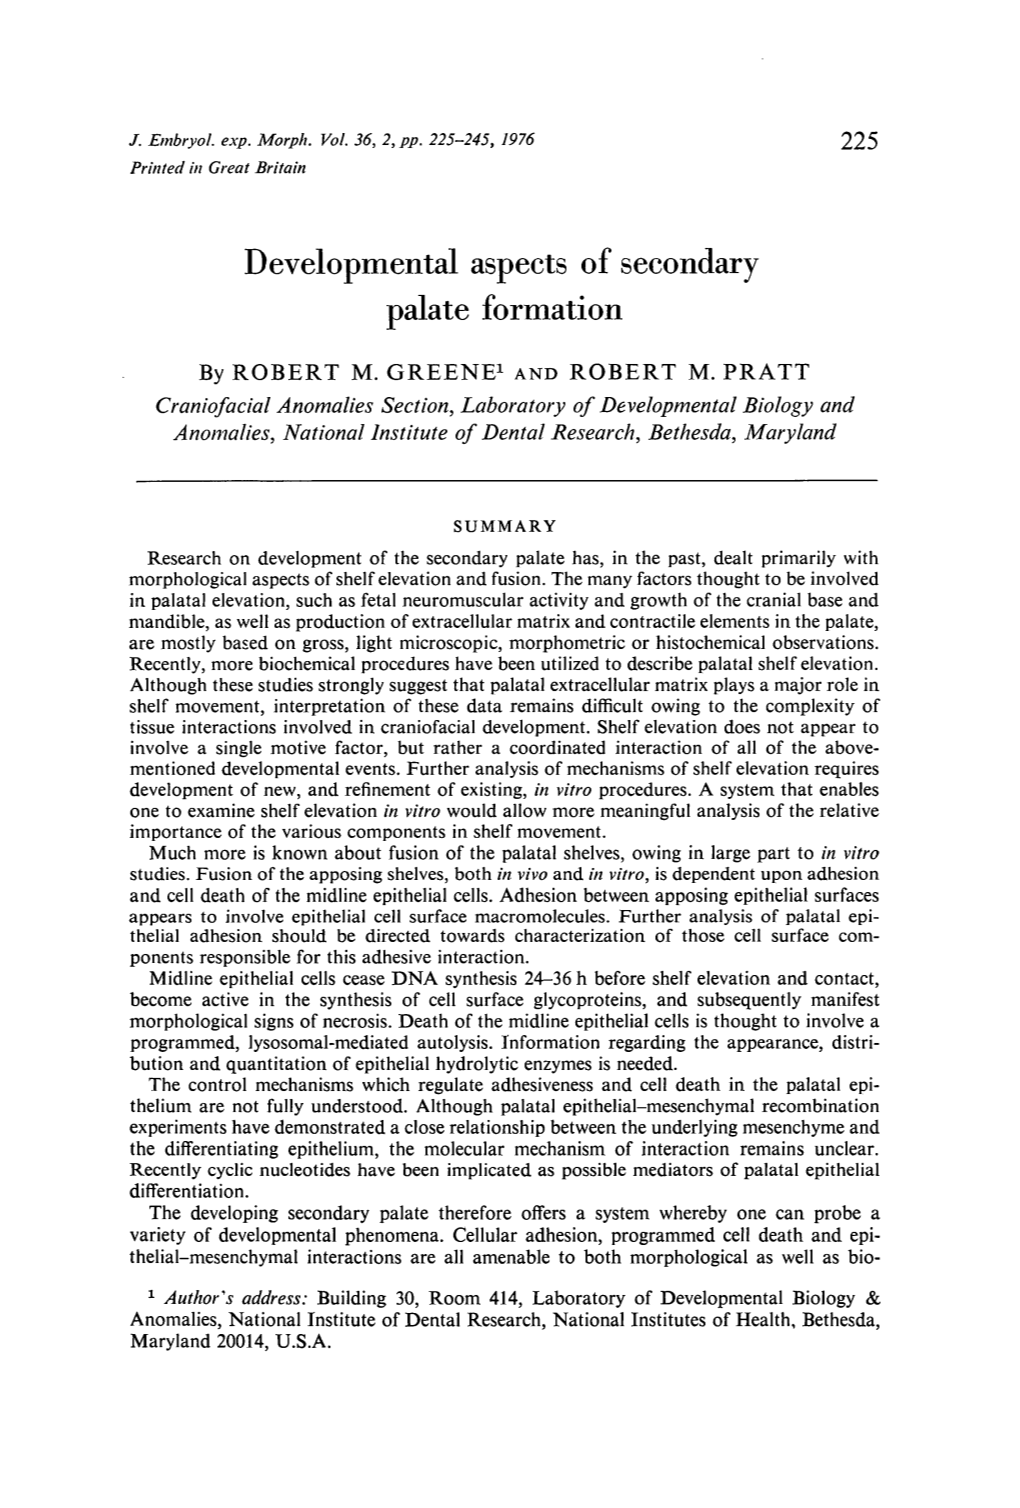 Developmental Aspects of Secondary Palate Formation